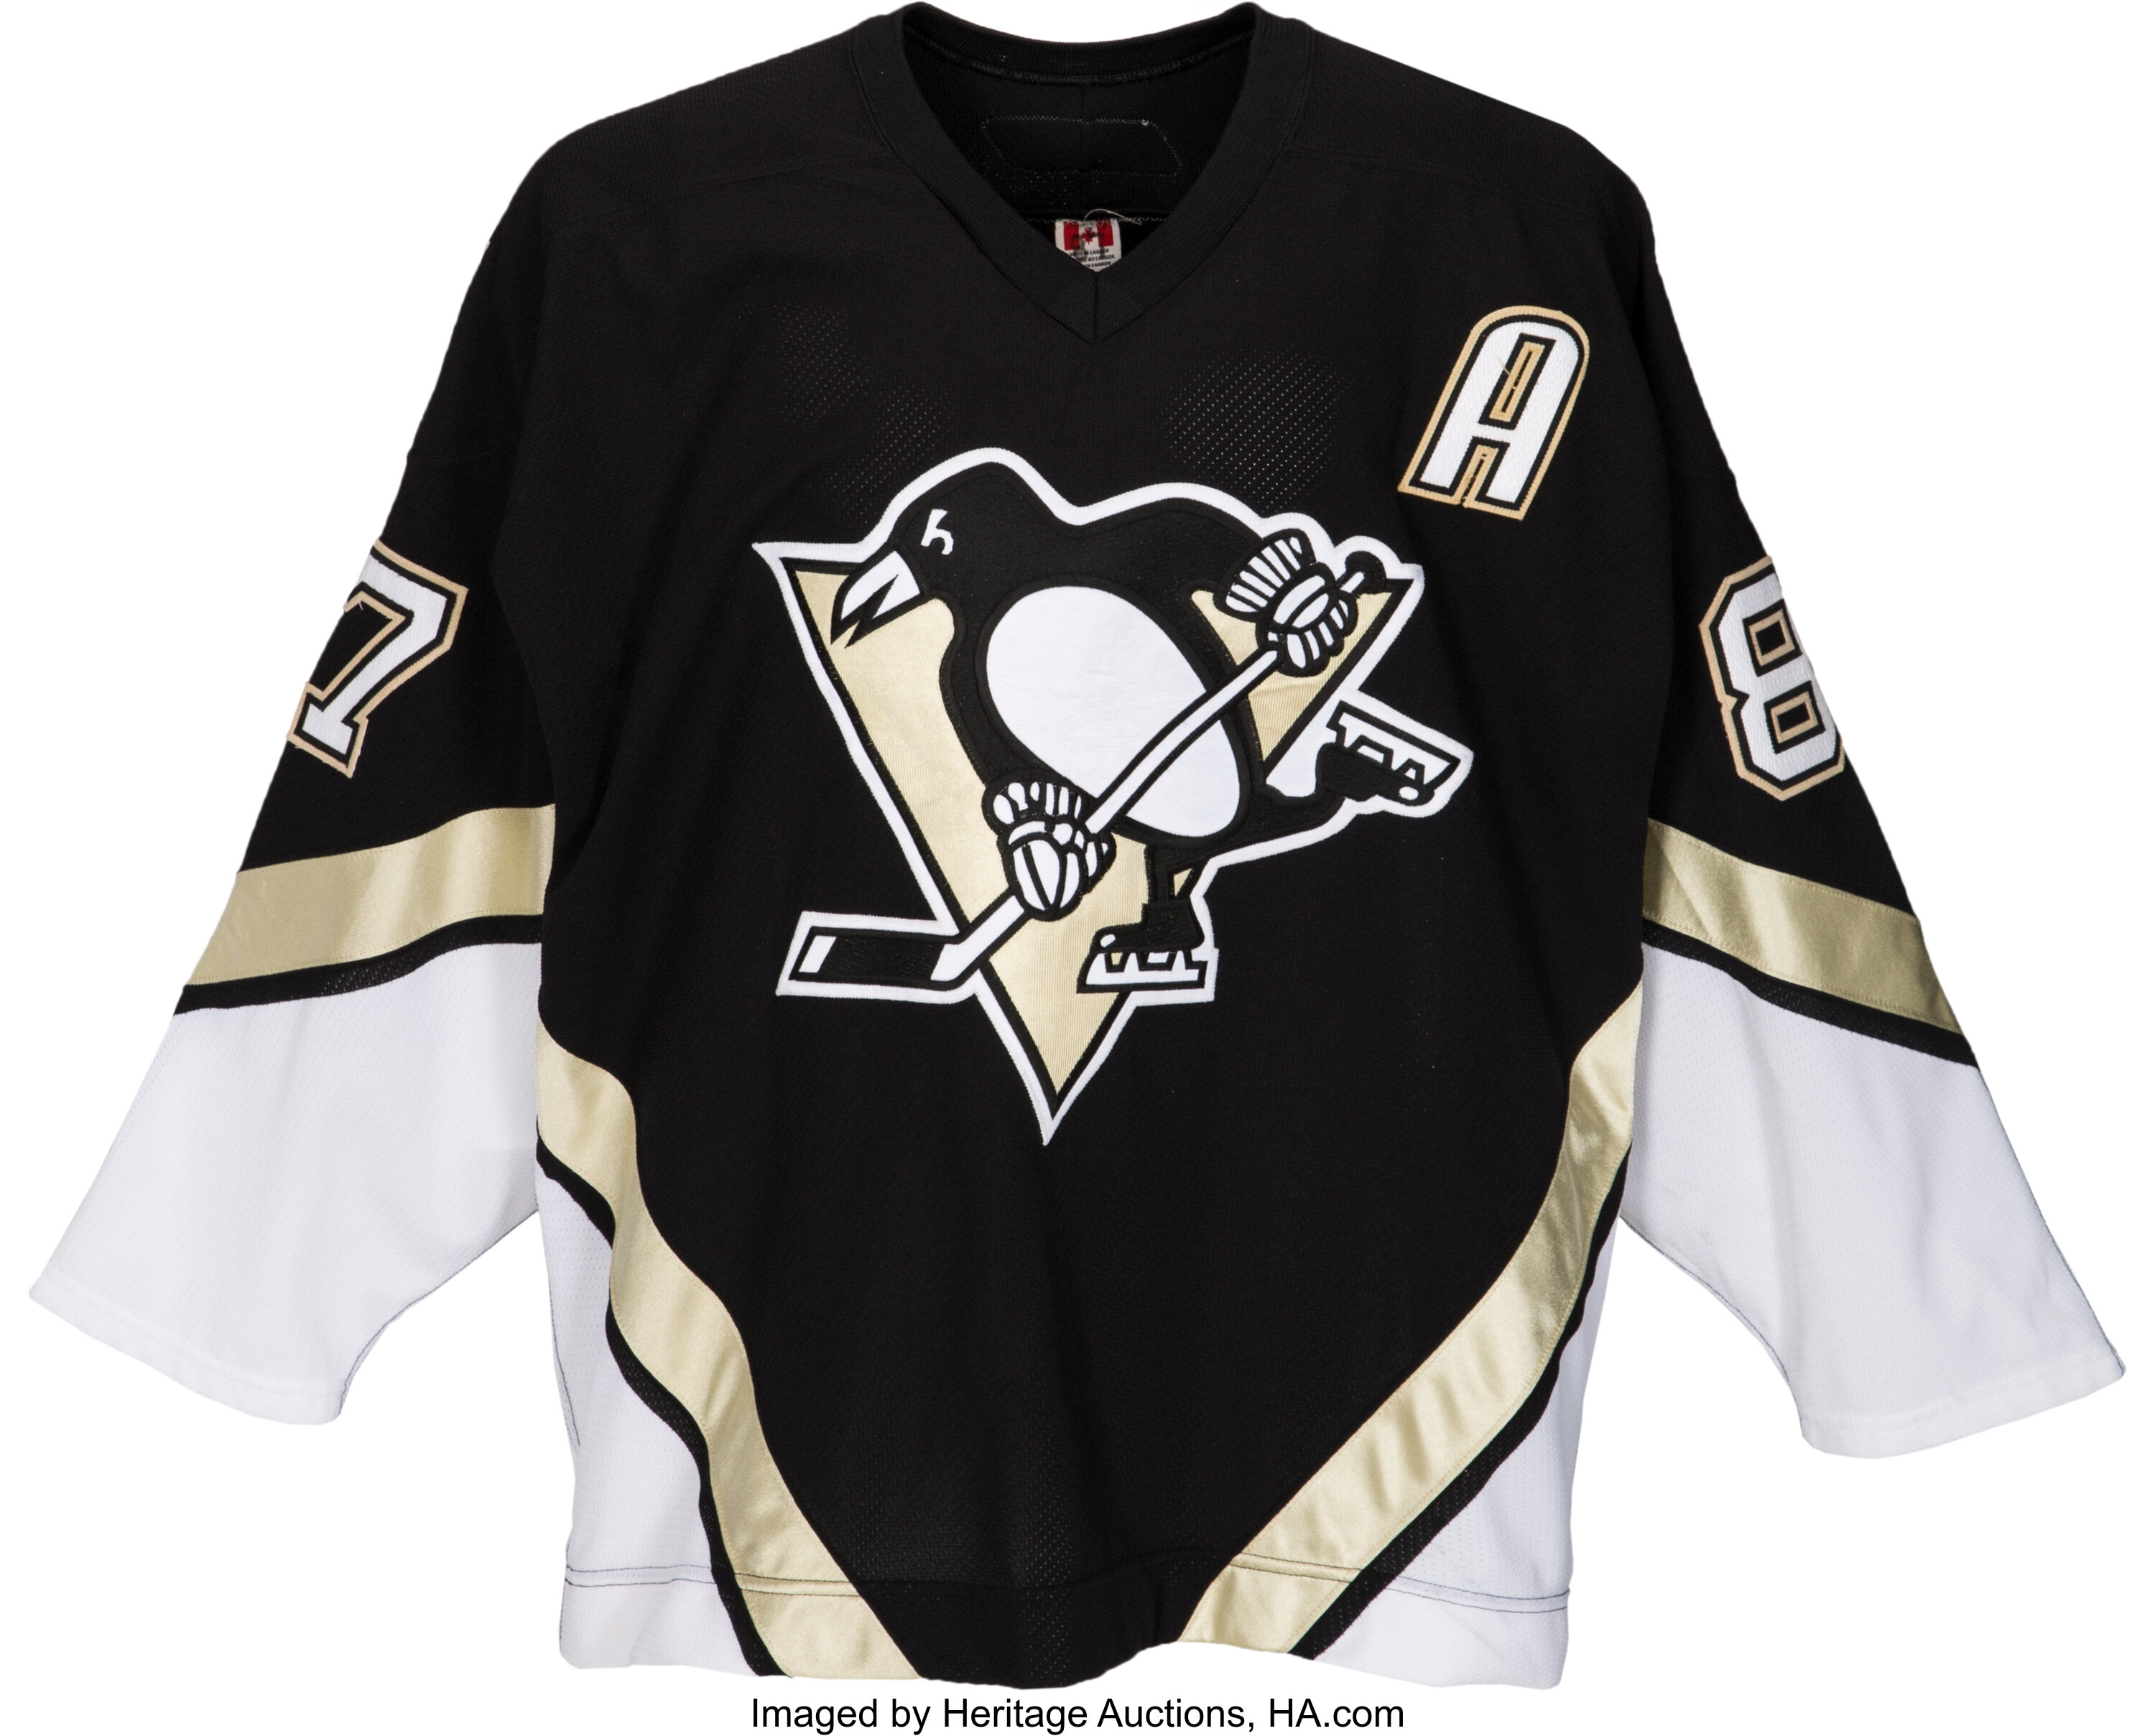 Sidney Crosby Jerseys  Sidney Crosby Pittsburgh Penguins Jerseys